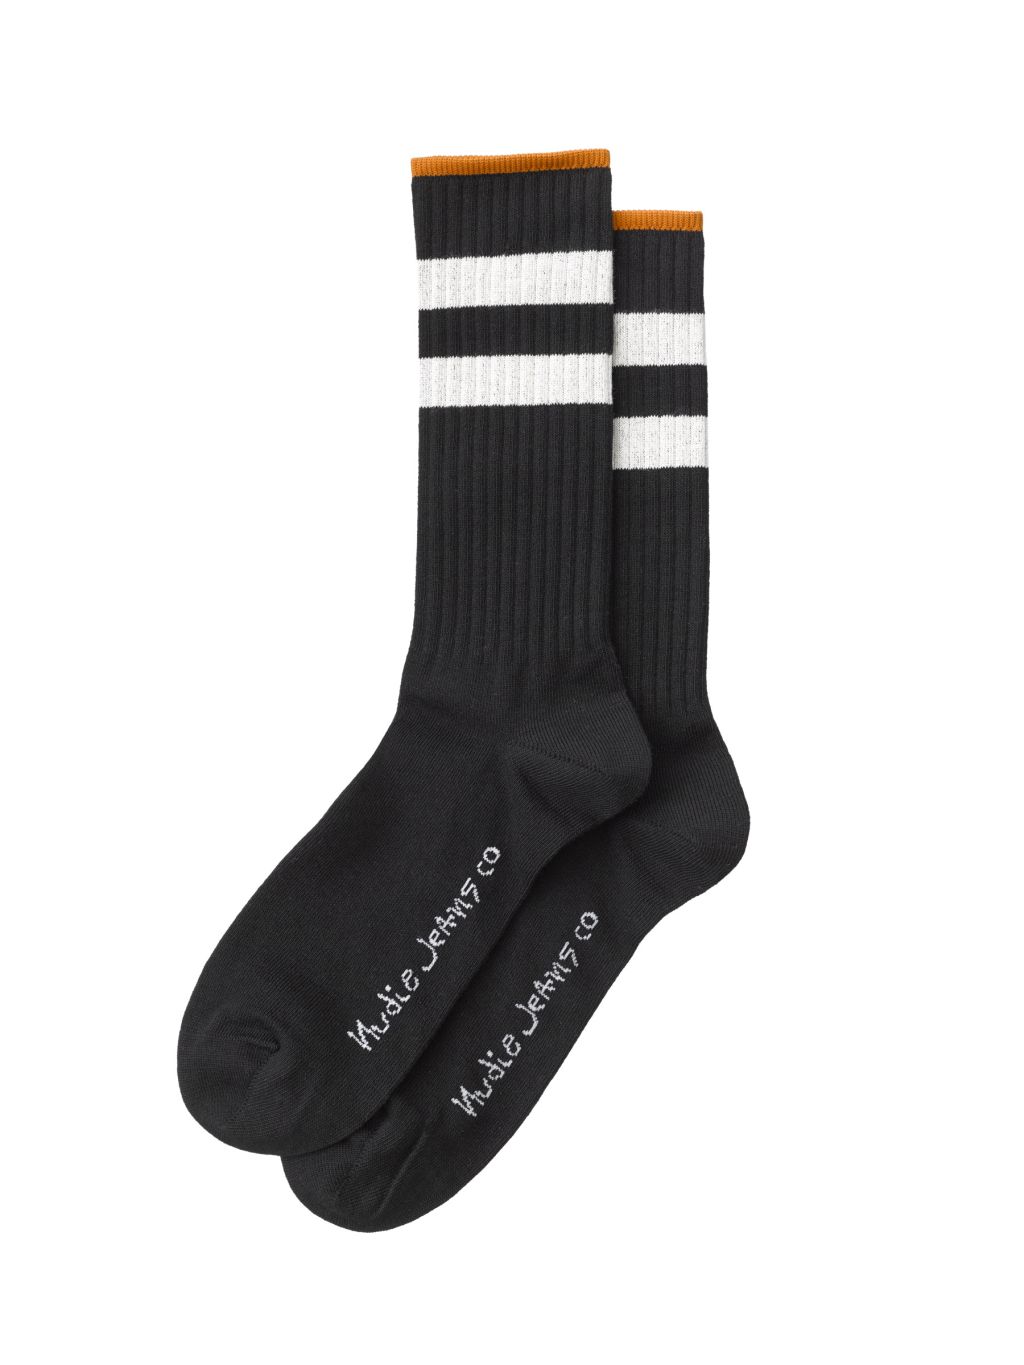 Amundsson Sport Socks black/white One Size